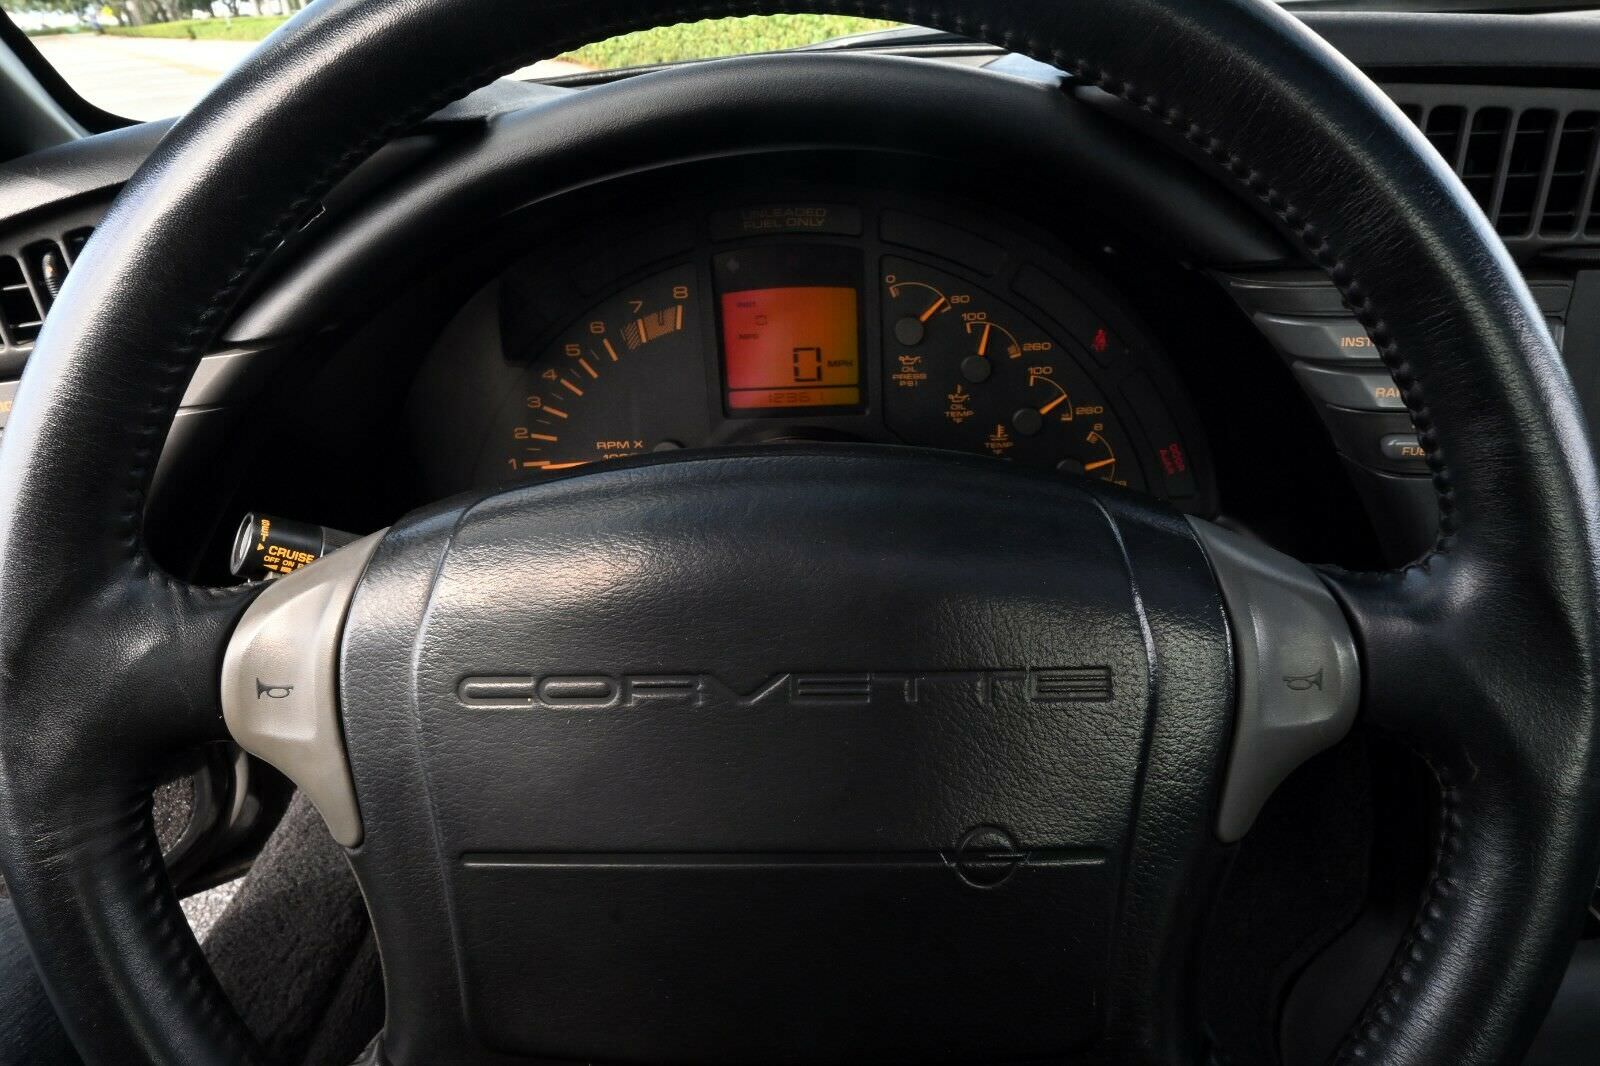 1990 Corvette ZR-1 Active Suspension Prototype